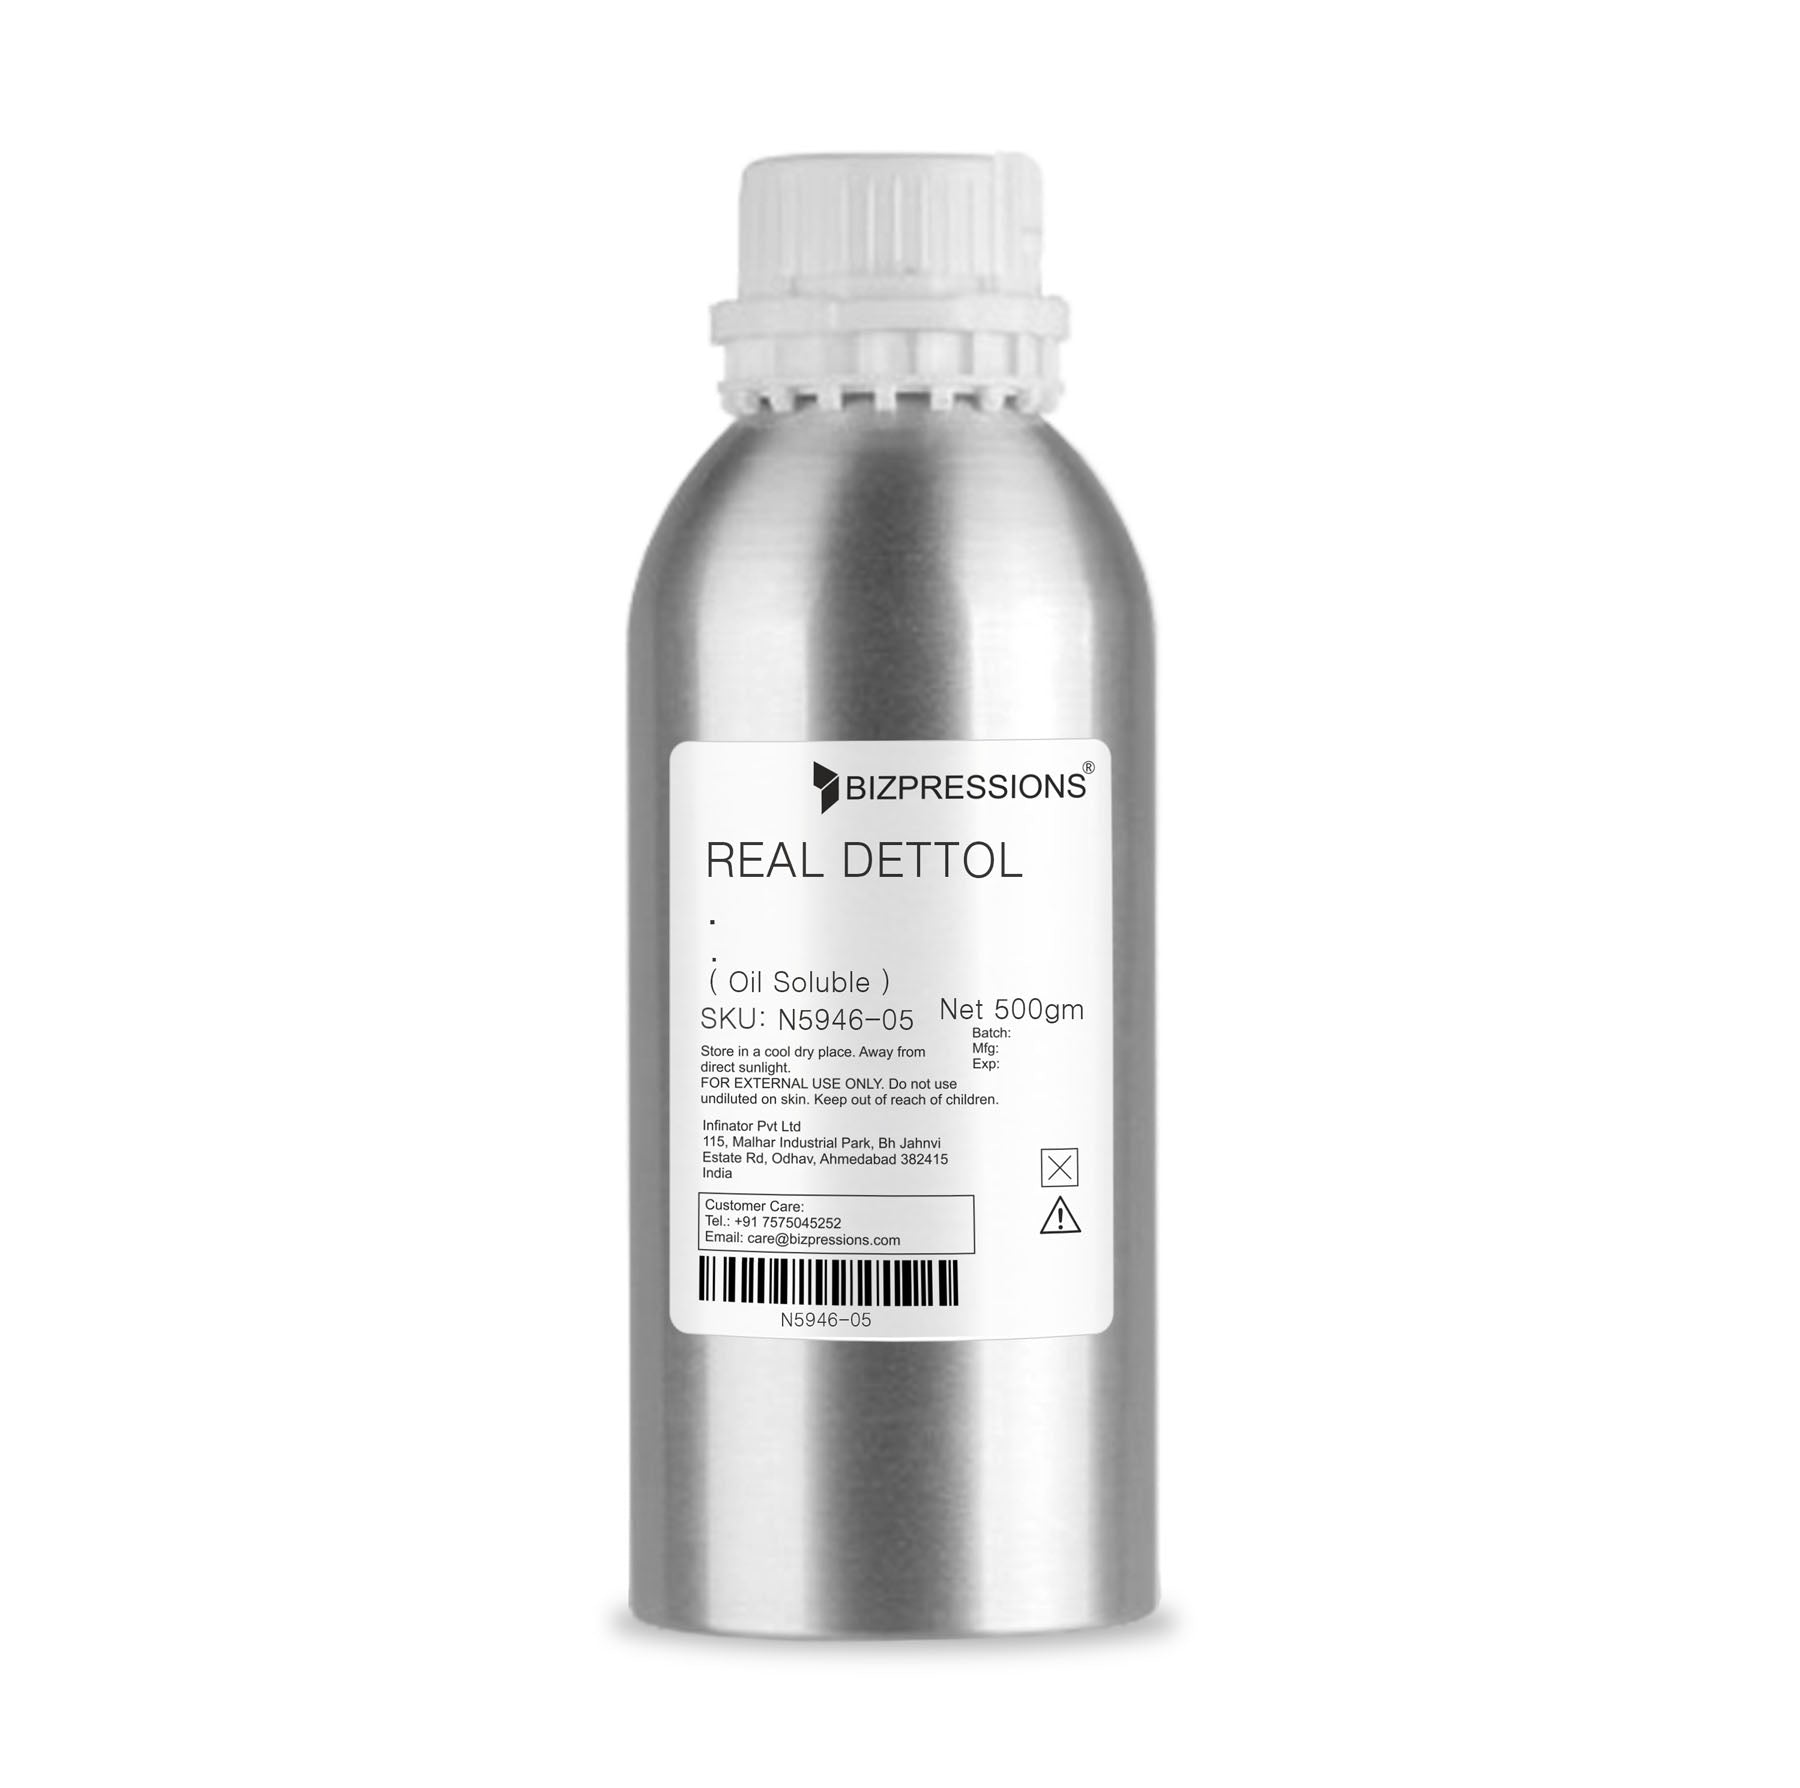 REAL DETTOL - Fragrance ( Oil Soluble ) - 500 gm